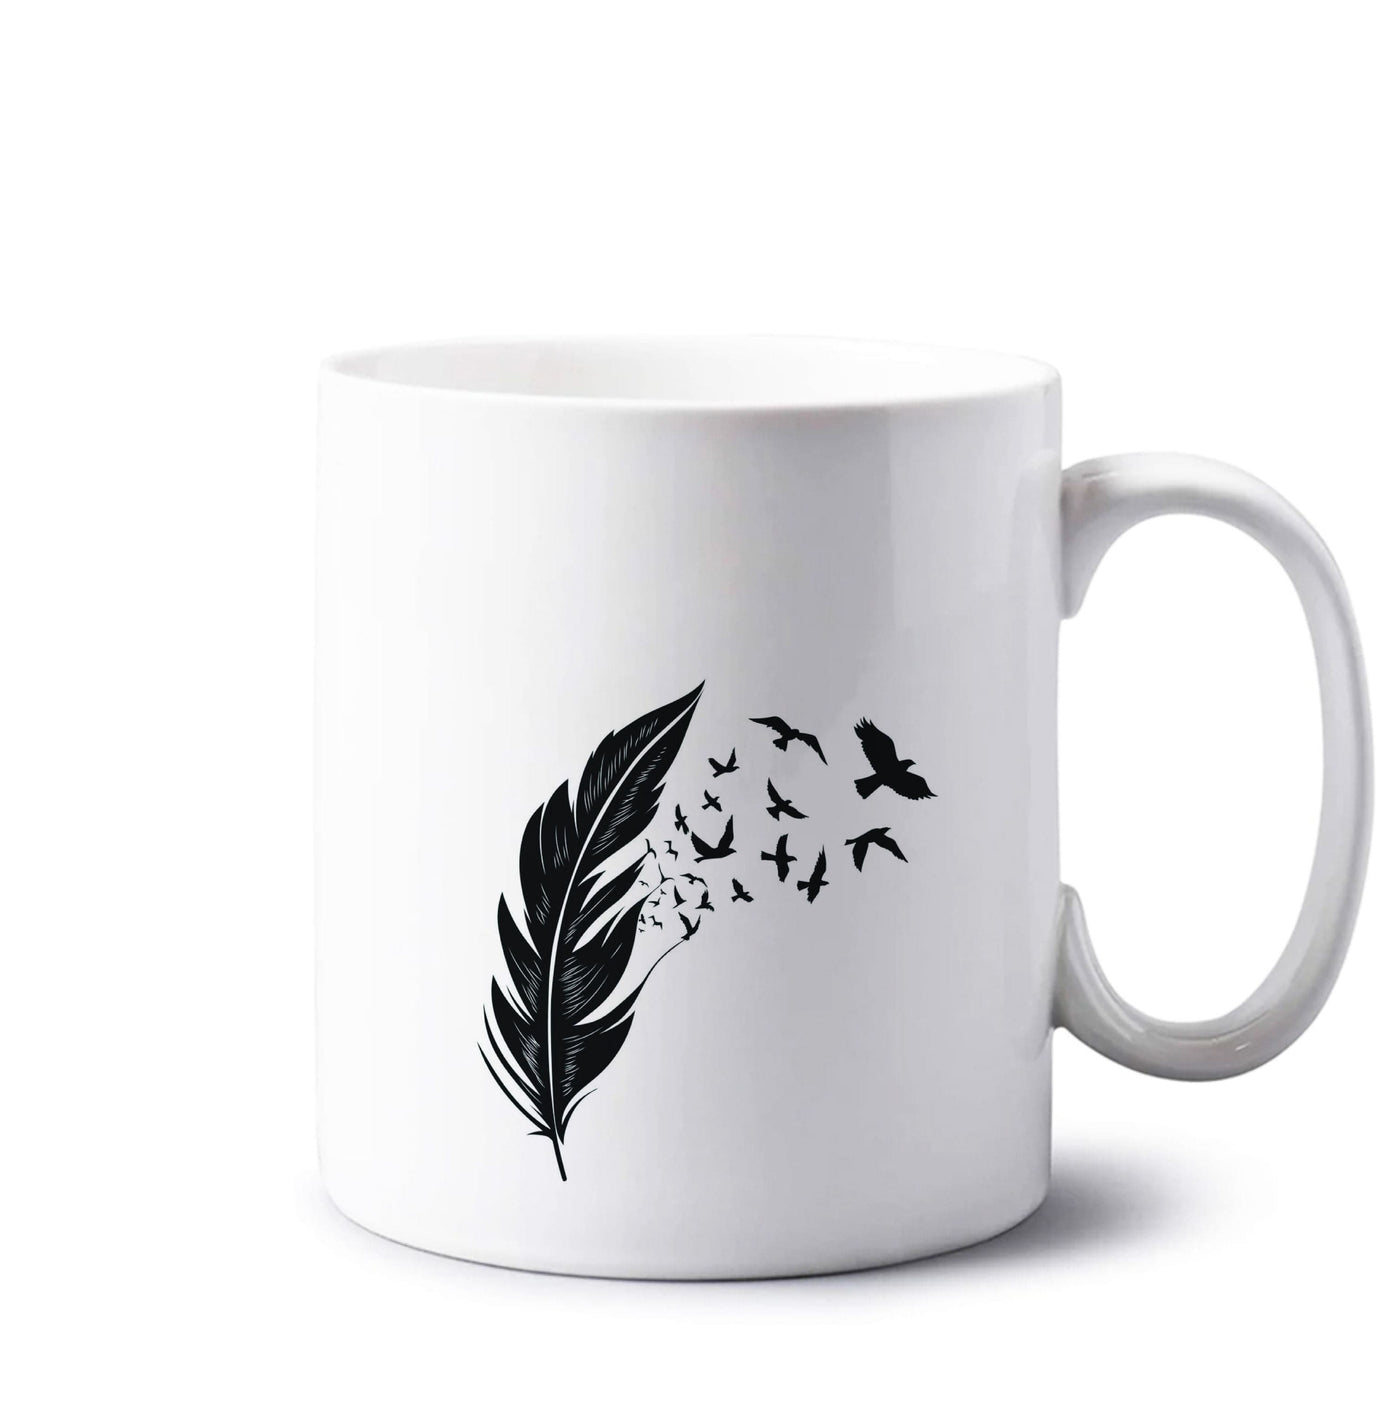 Birds From Feathers - The Originals Mug